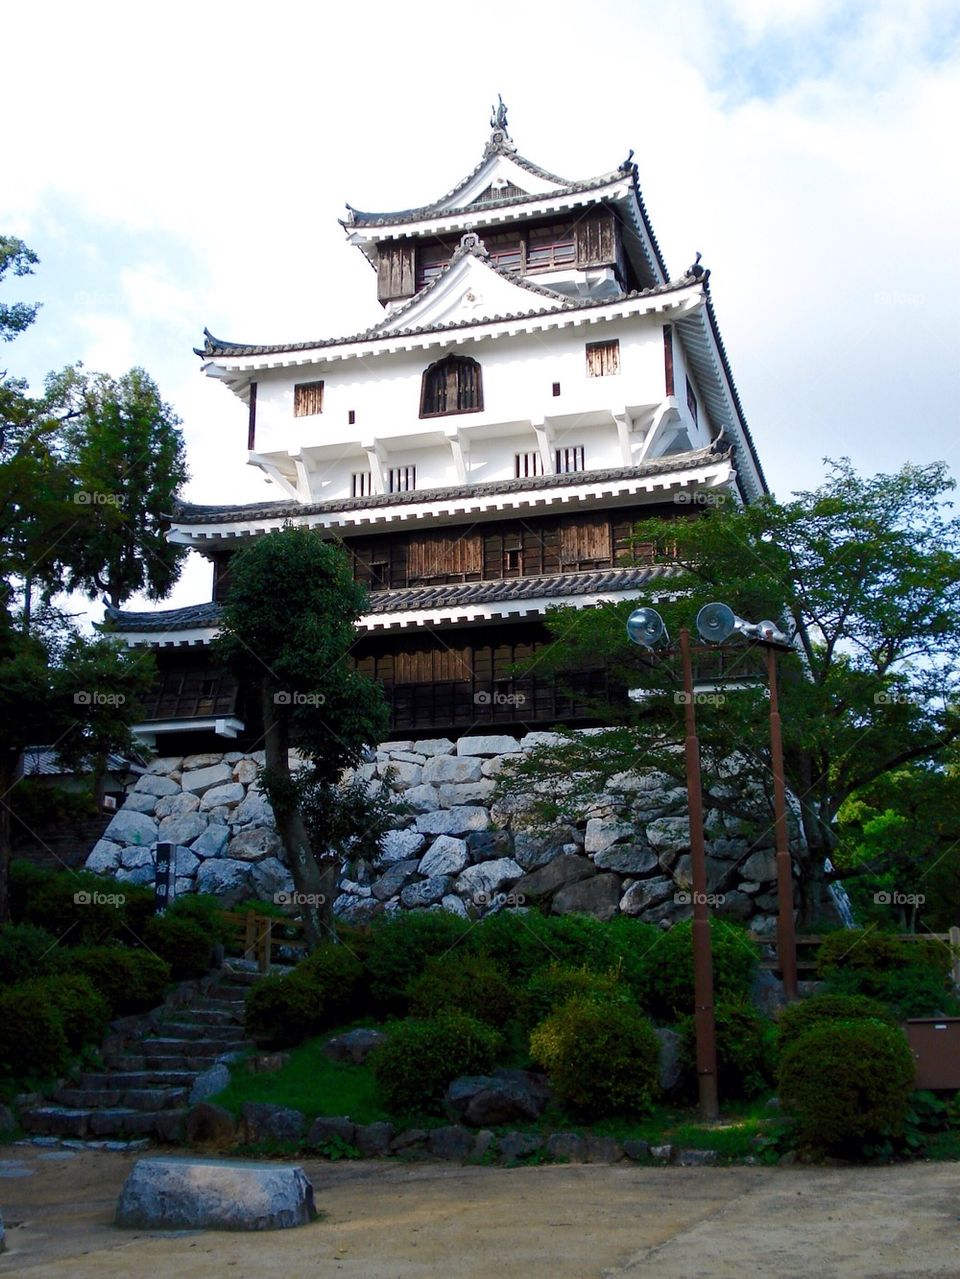 Kintai castle